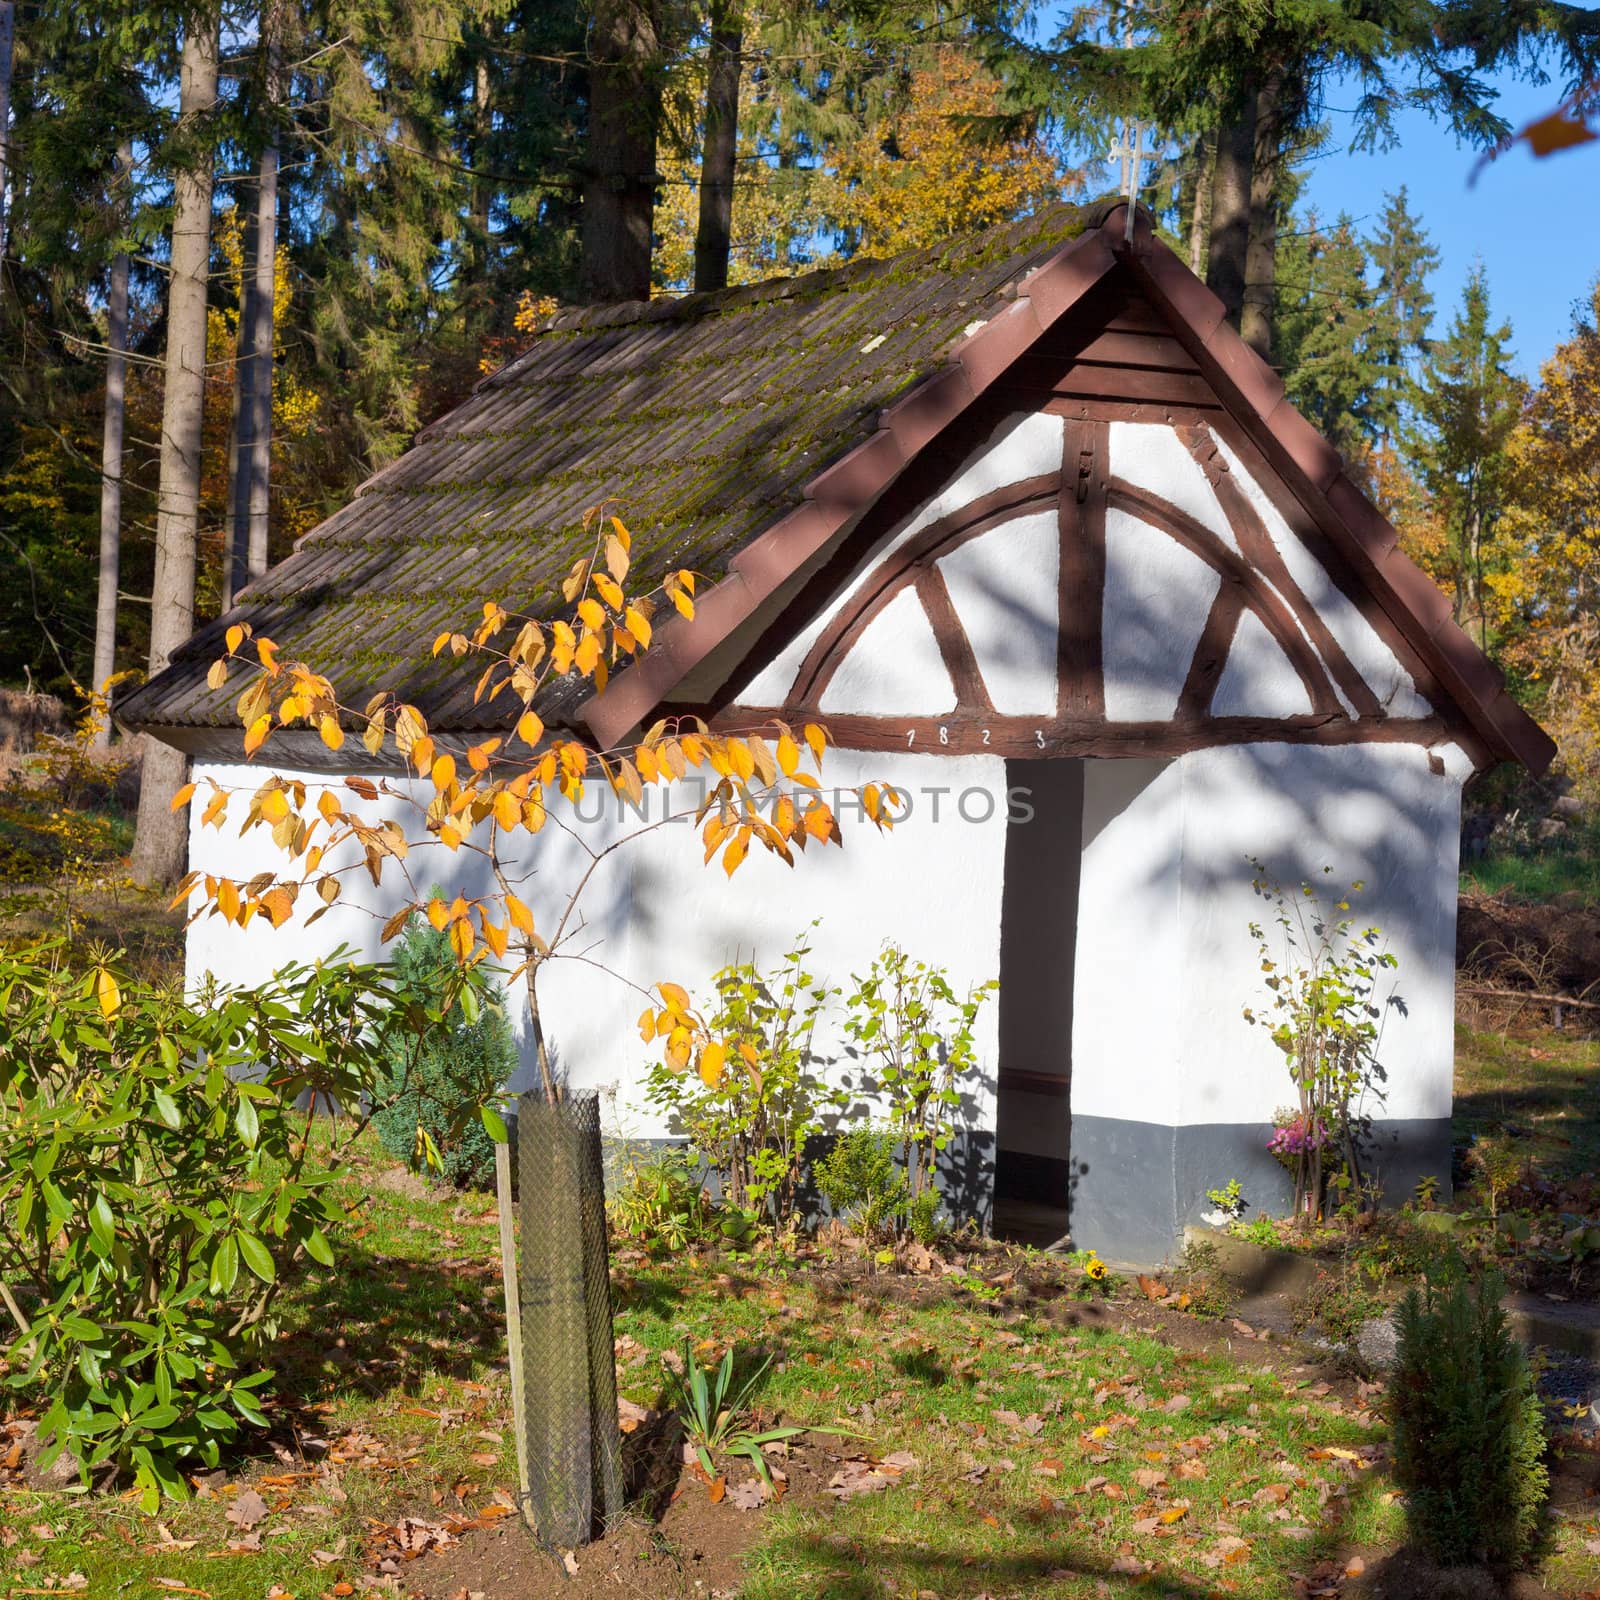 Historic Chapel in fall forest, Eifel, Germany by PiLens